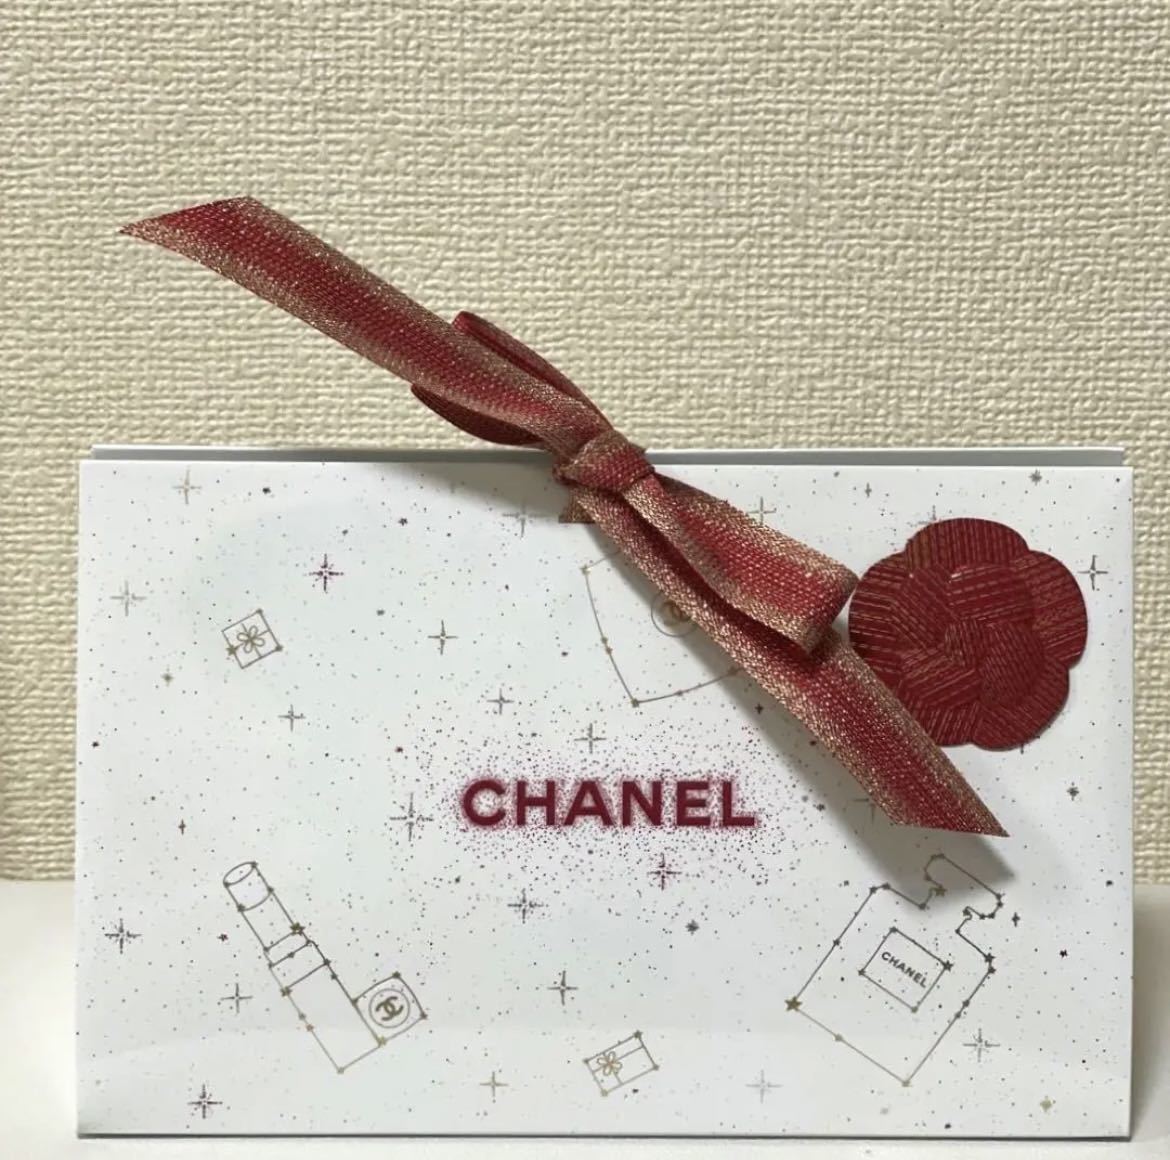  новый товар Chanel CHANEL лента имеется подарочная коробка Hori te- Рождество подарочная коробка упаковка высокий бренд tepako spo lite-